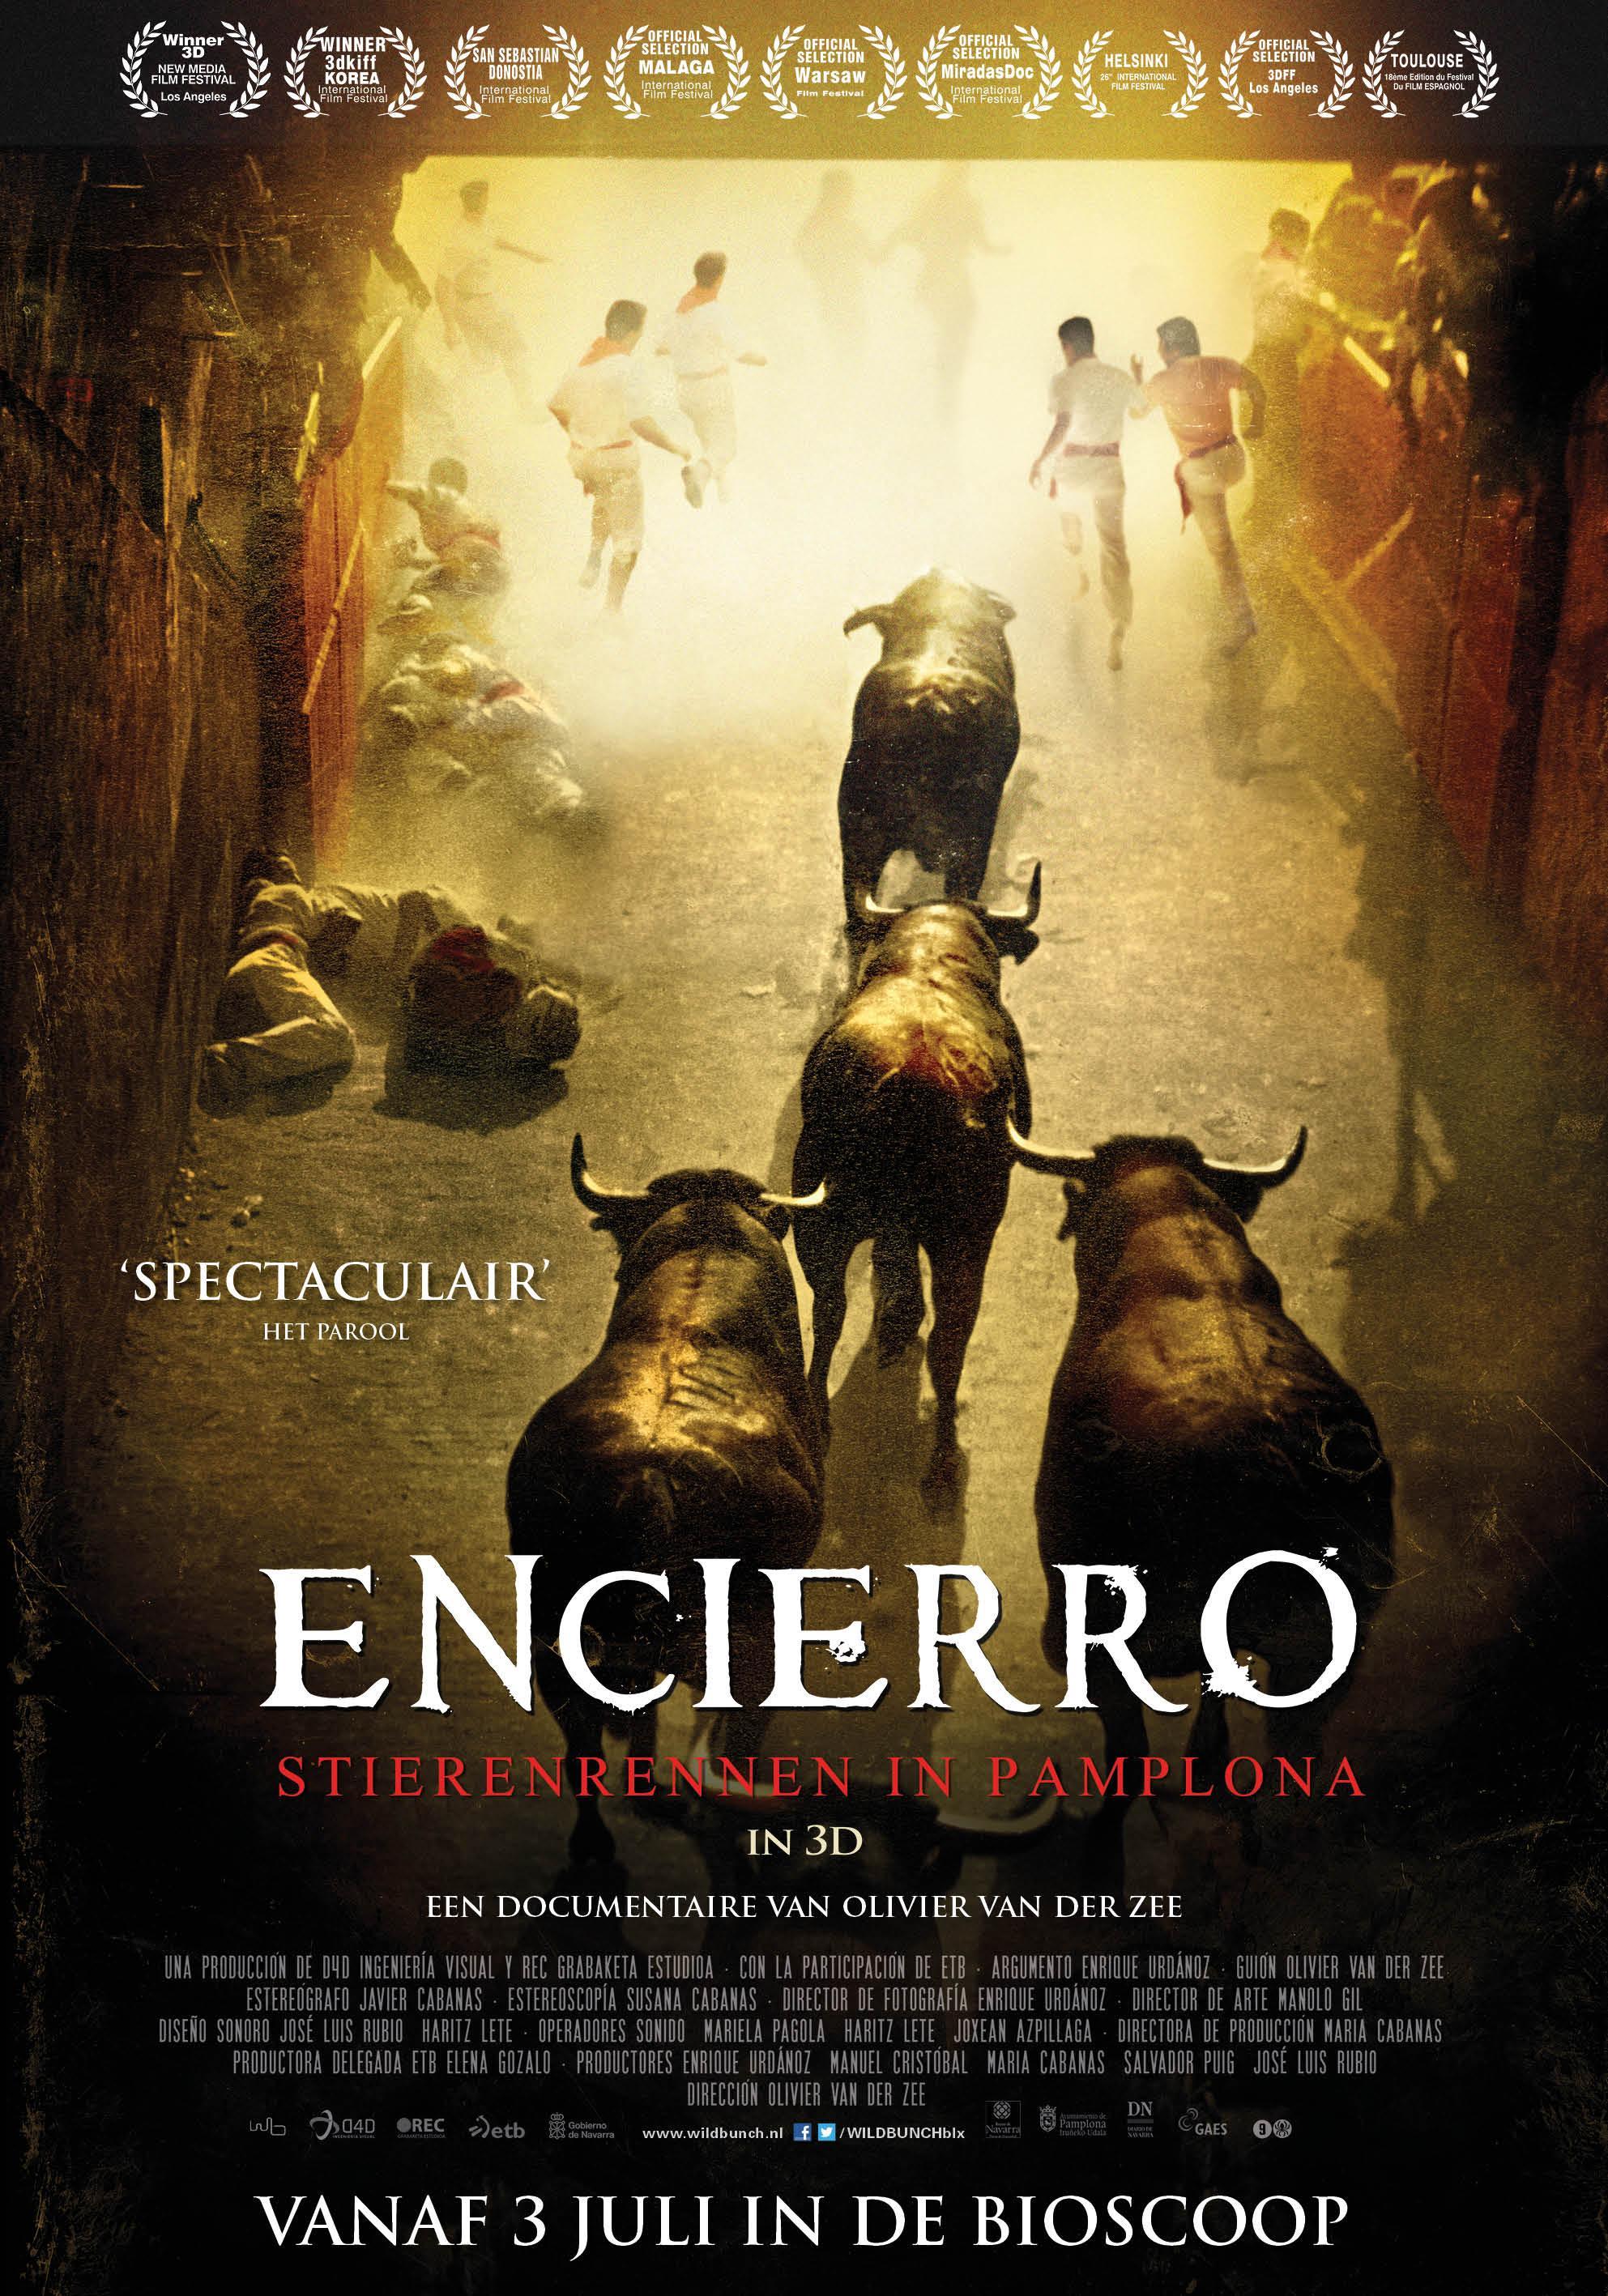 Постер фильма Encierro 3D: Bull Running in Pamplona